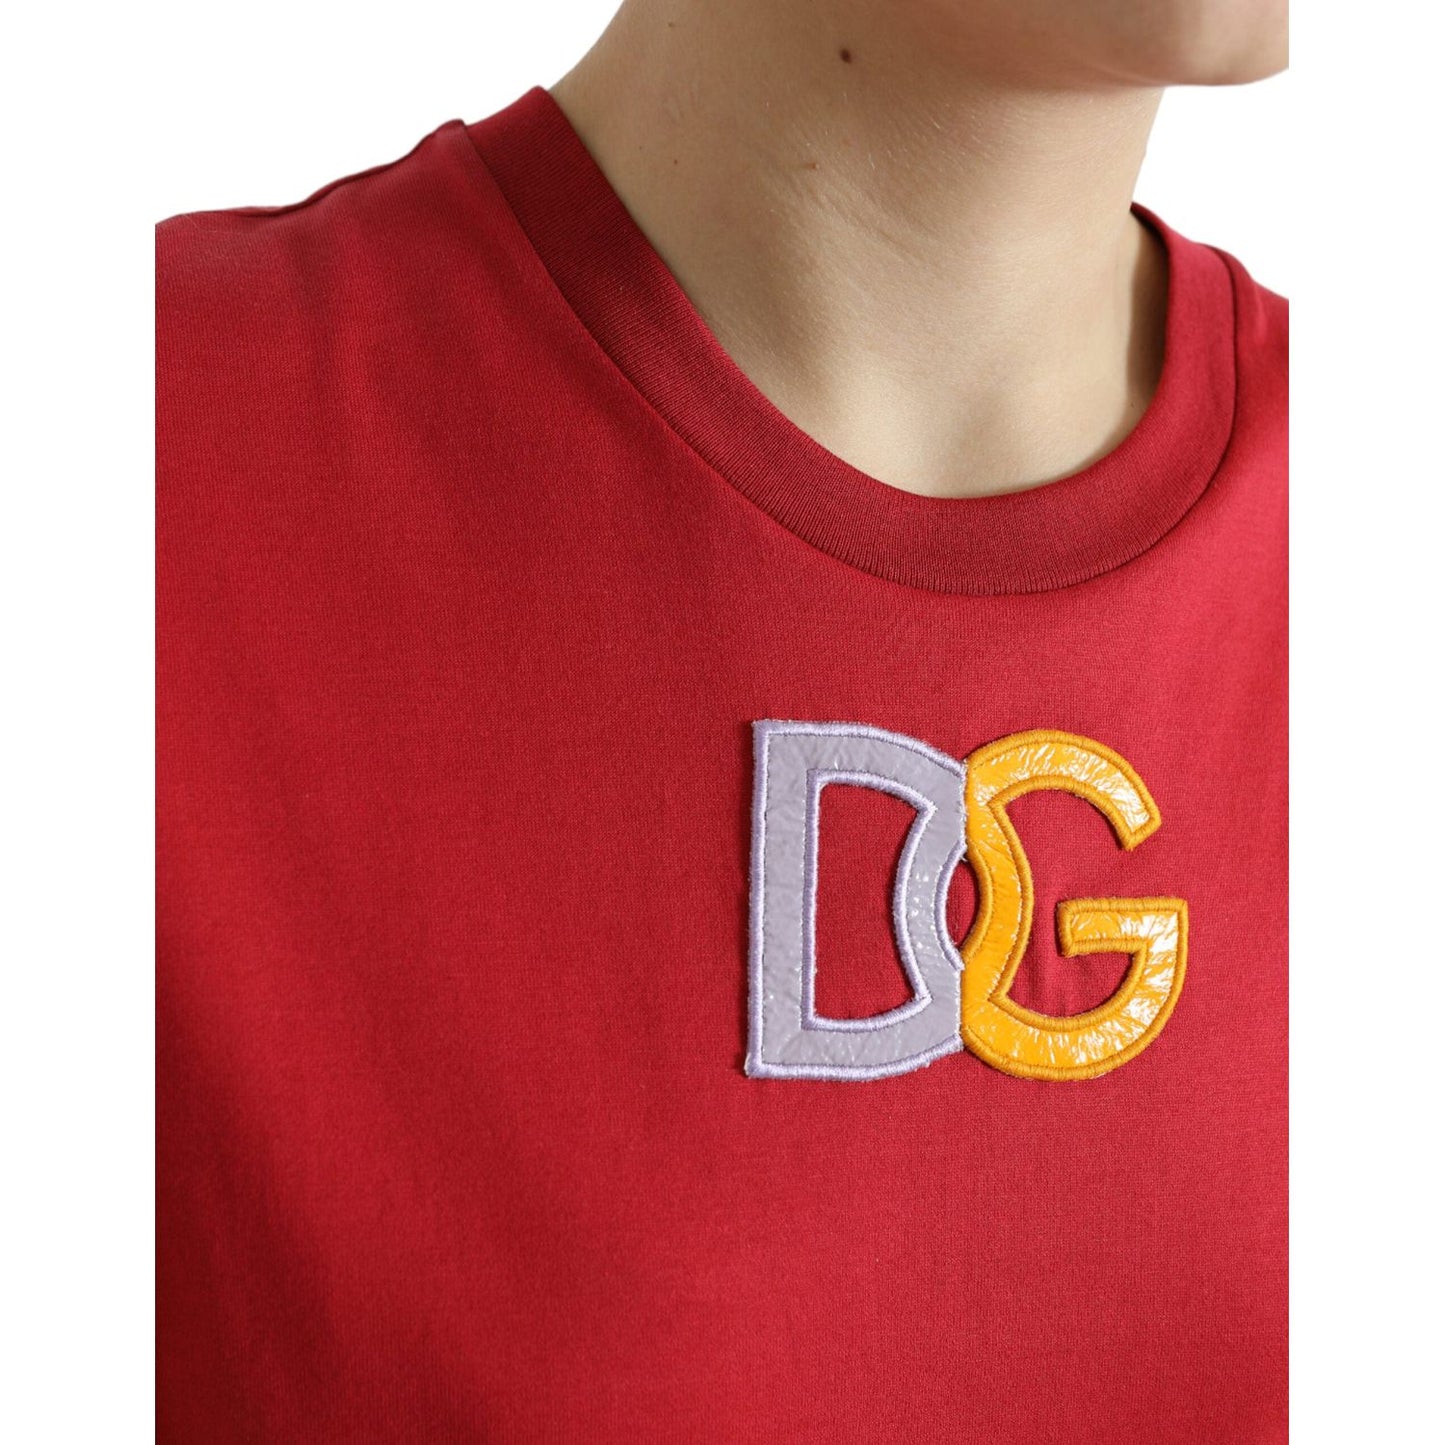 Dolce & Gabbana Elegant Red Cotton Crew Neck Tank Top red-cotton-dg-logo-crew-neck-tank-top-t-shirt 465A0926-BG-scaled-49733954-dc4.jpg